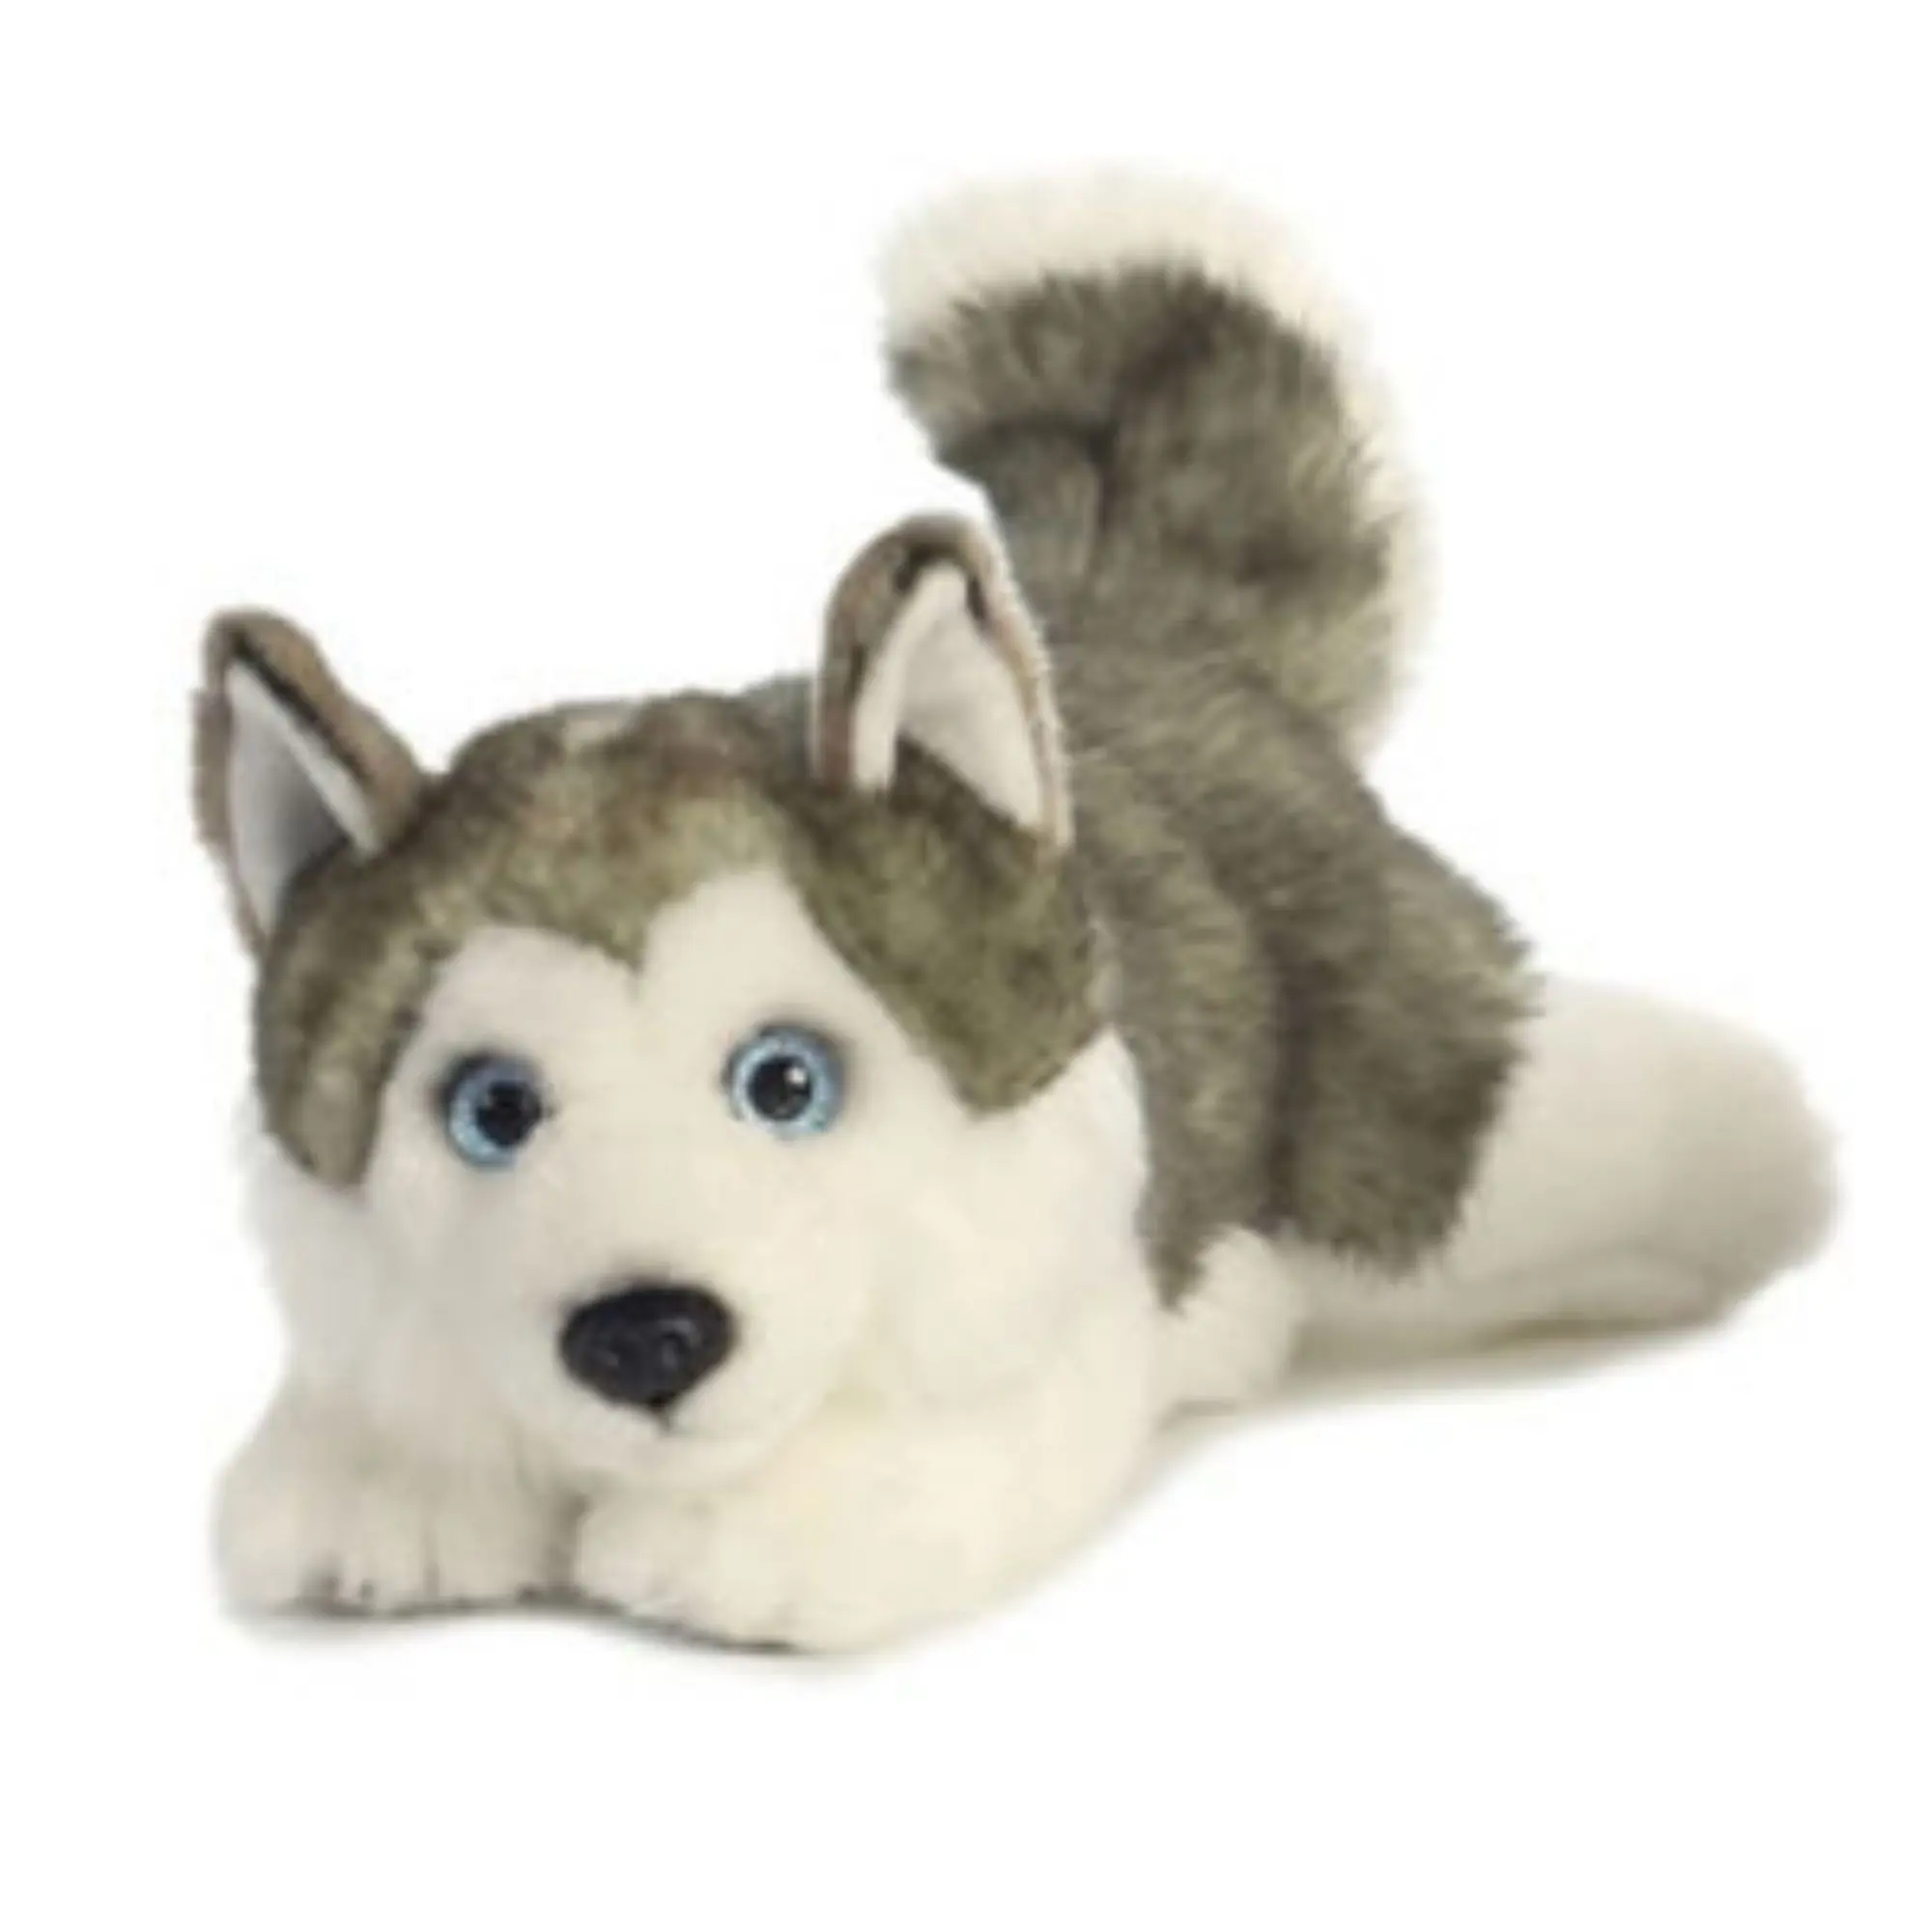 Soft husky plush dog stuffed toys as Valentines gifts